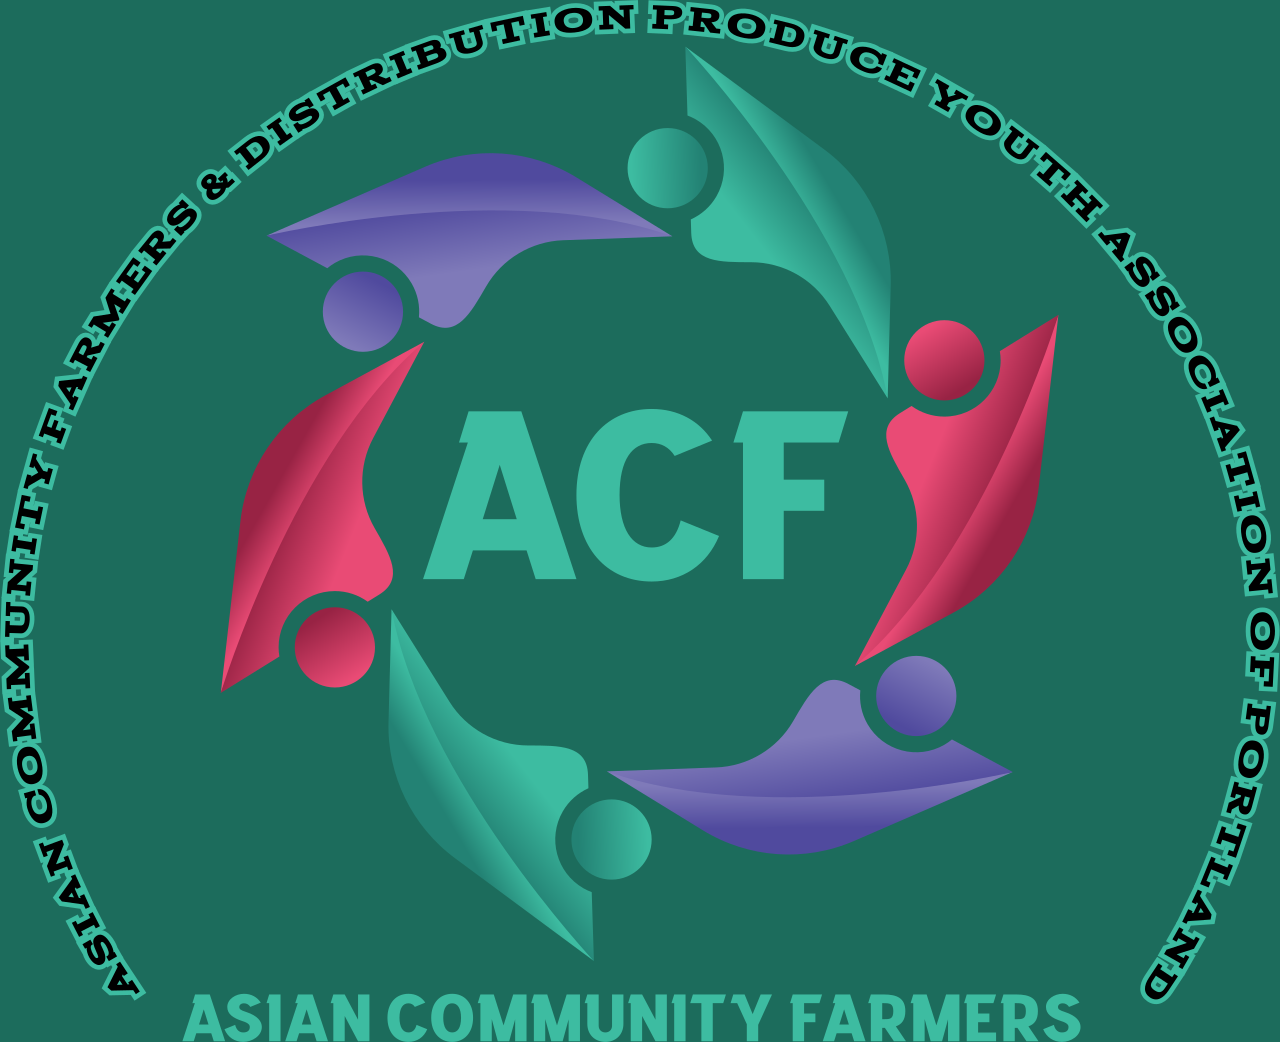 ASIAN COMMUNITY FARMERS & DISTRIBUTION PRODUCE YOUTH ASSOCIATION OF PORTLAND's logo